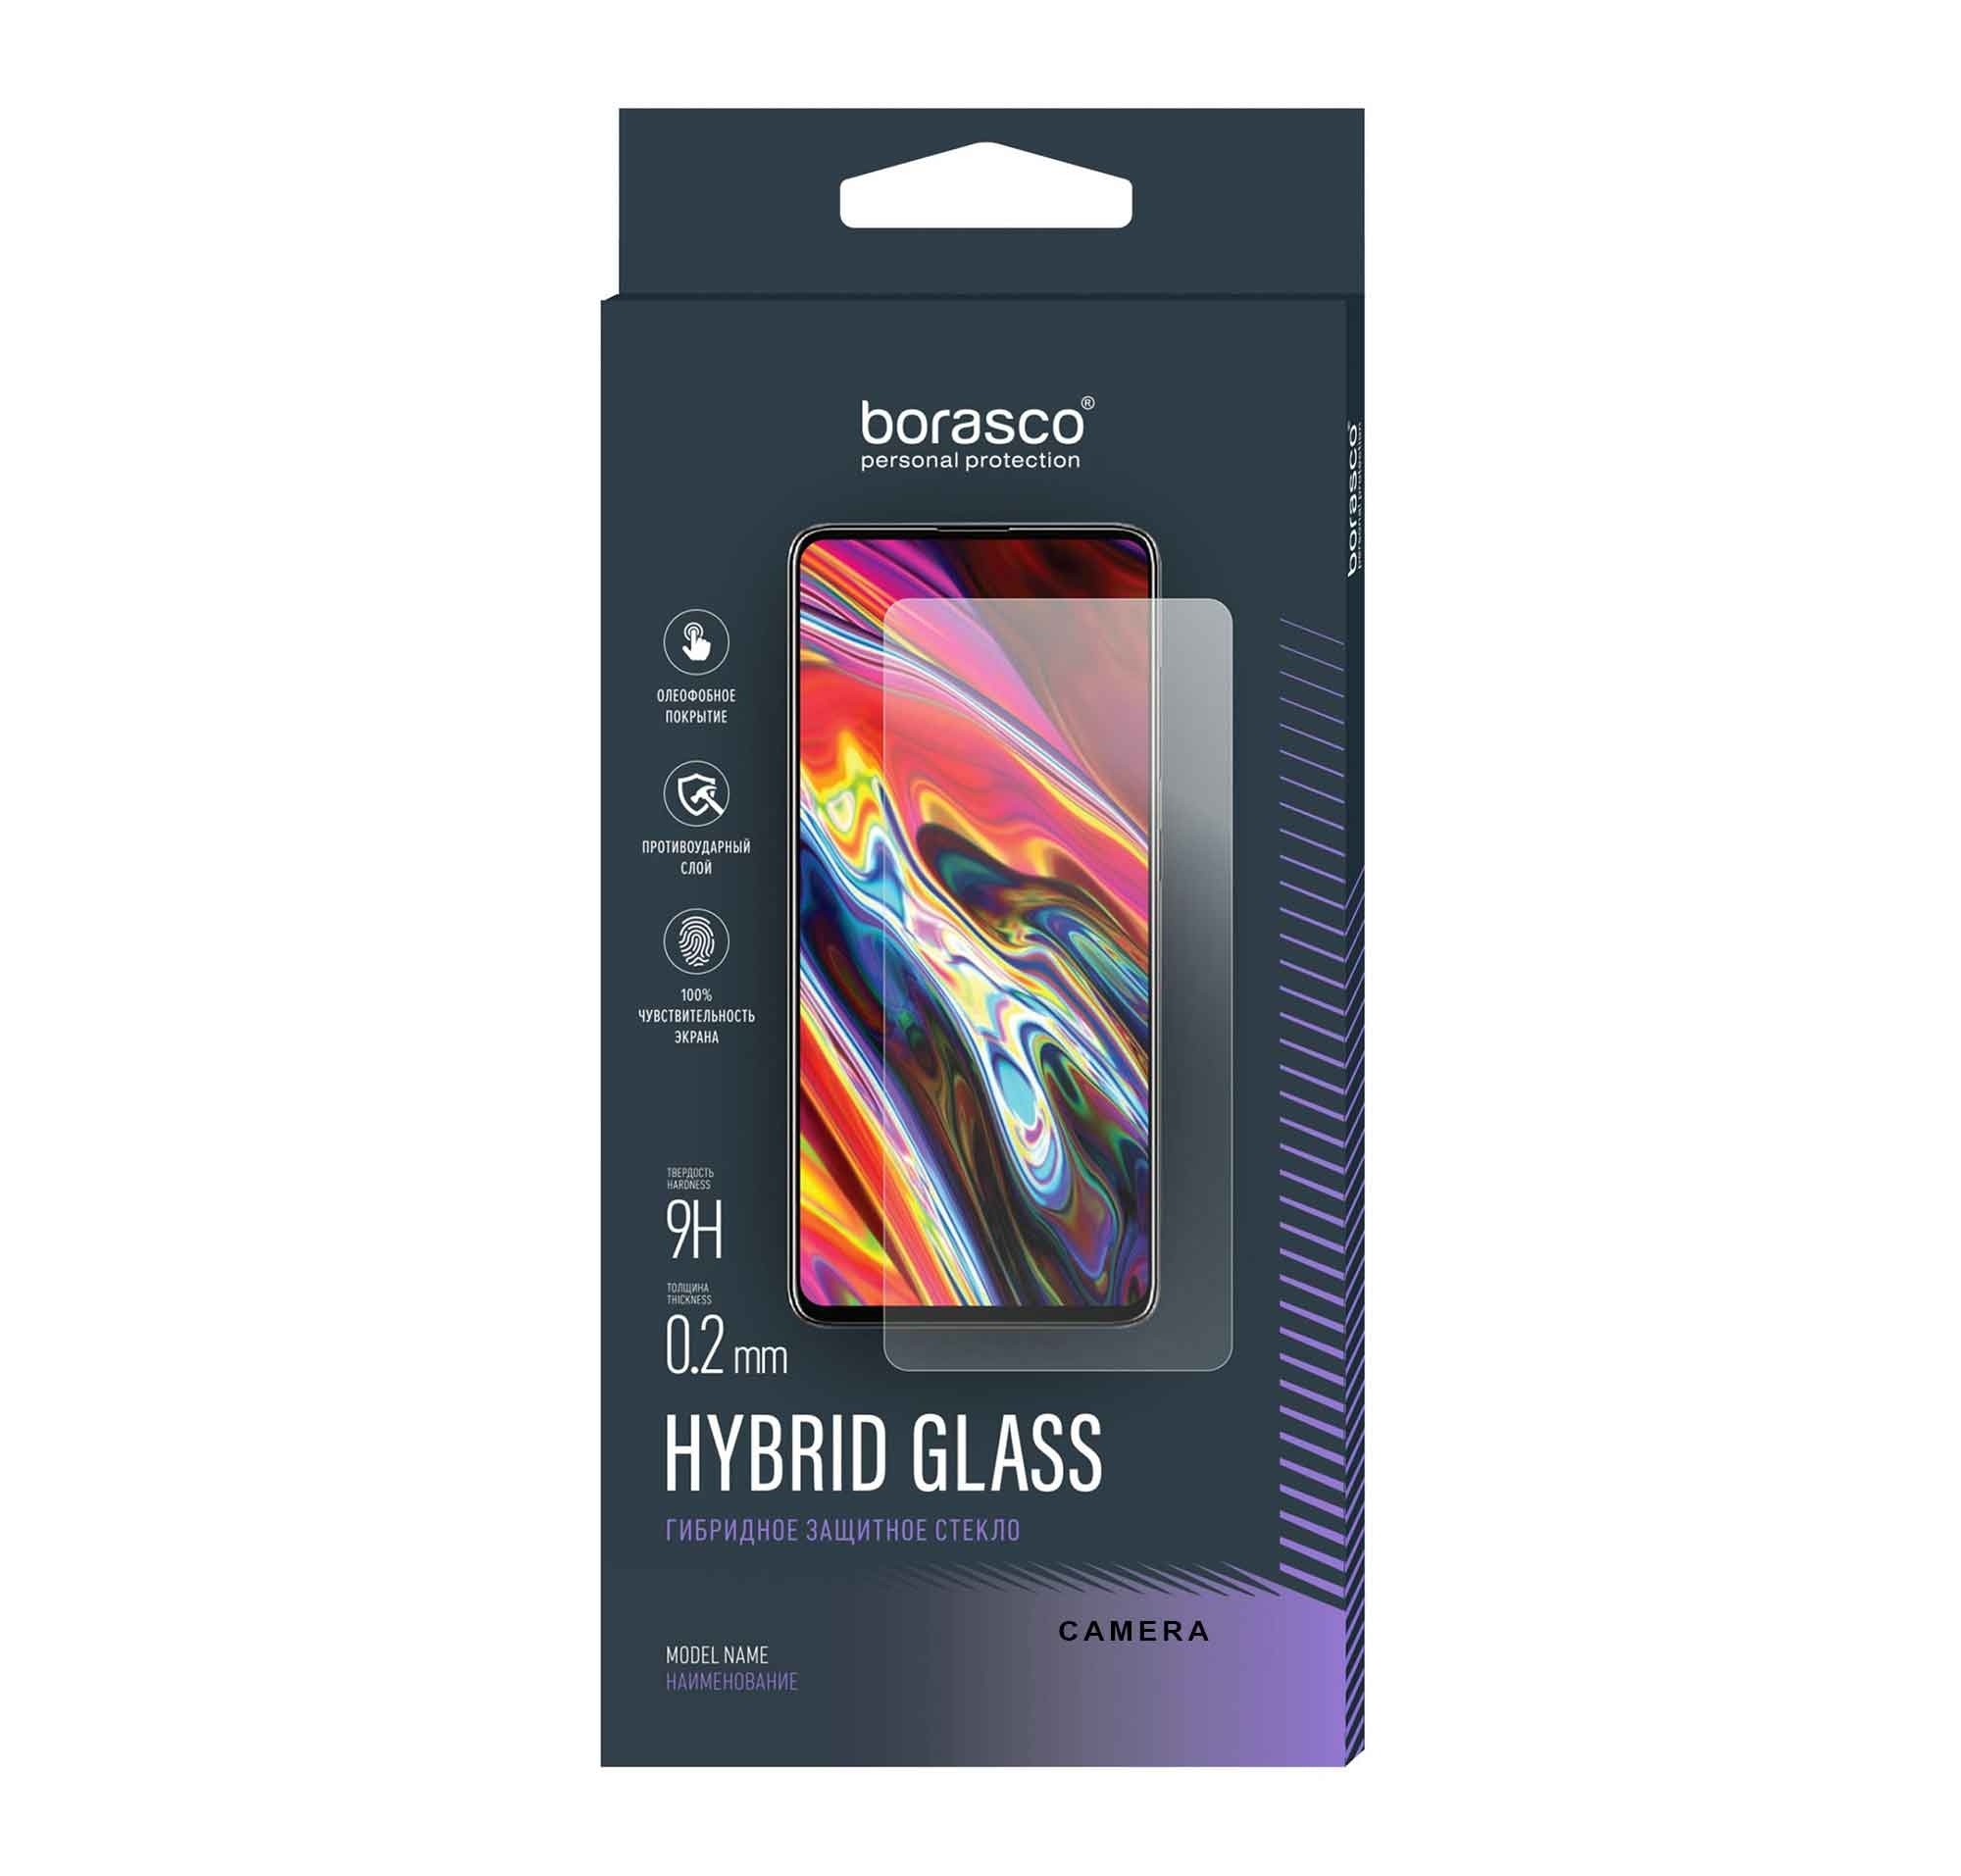 Стекло защитное BoraSCO (Экран+Камера) Hybrid Glass для Oukitel F150 R2022 чехол mypads мраморный рисунок для oukitel f150 h2022 задняя панель накладка бампер